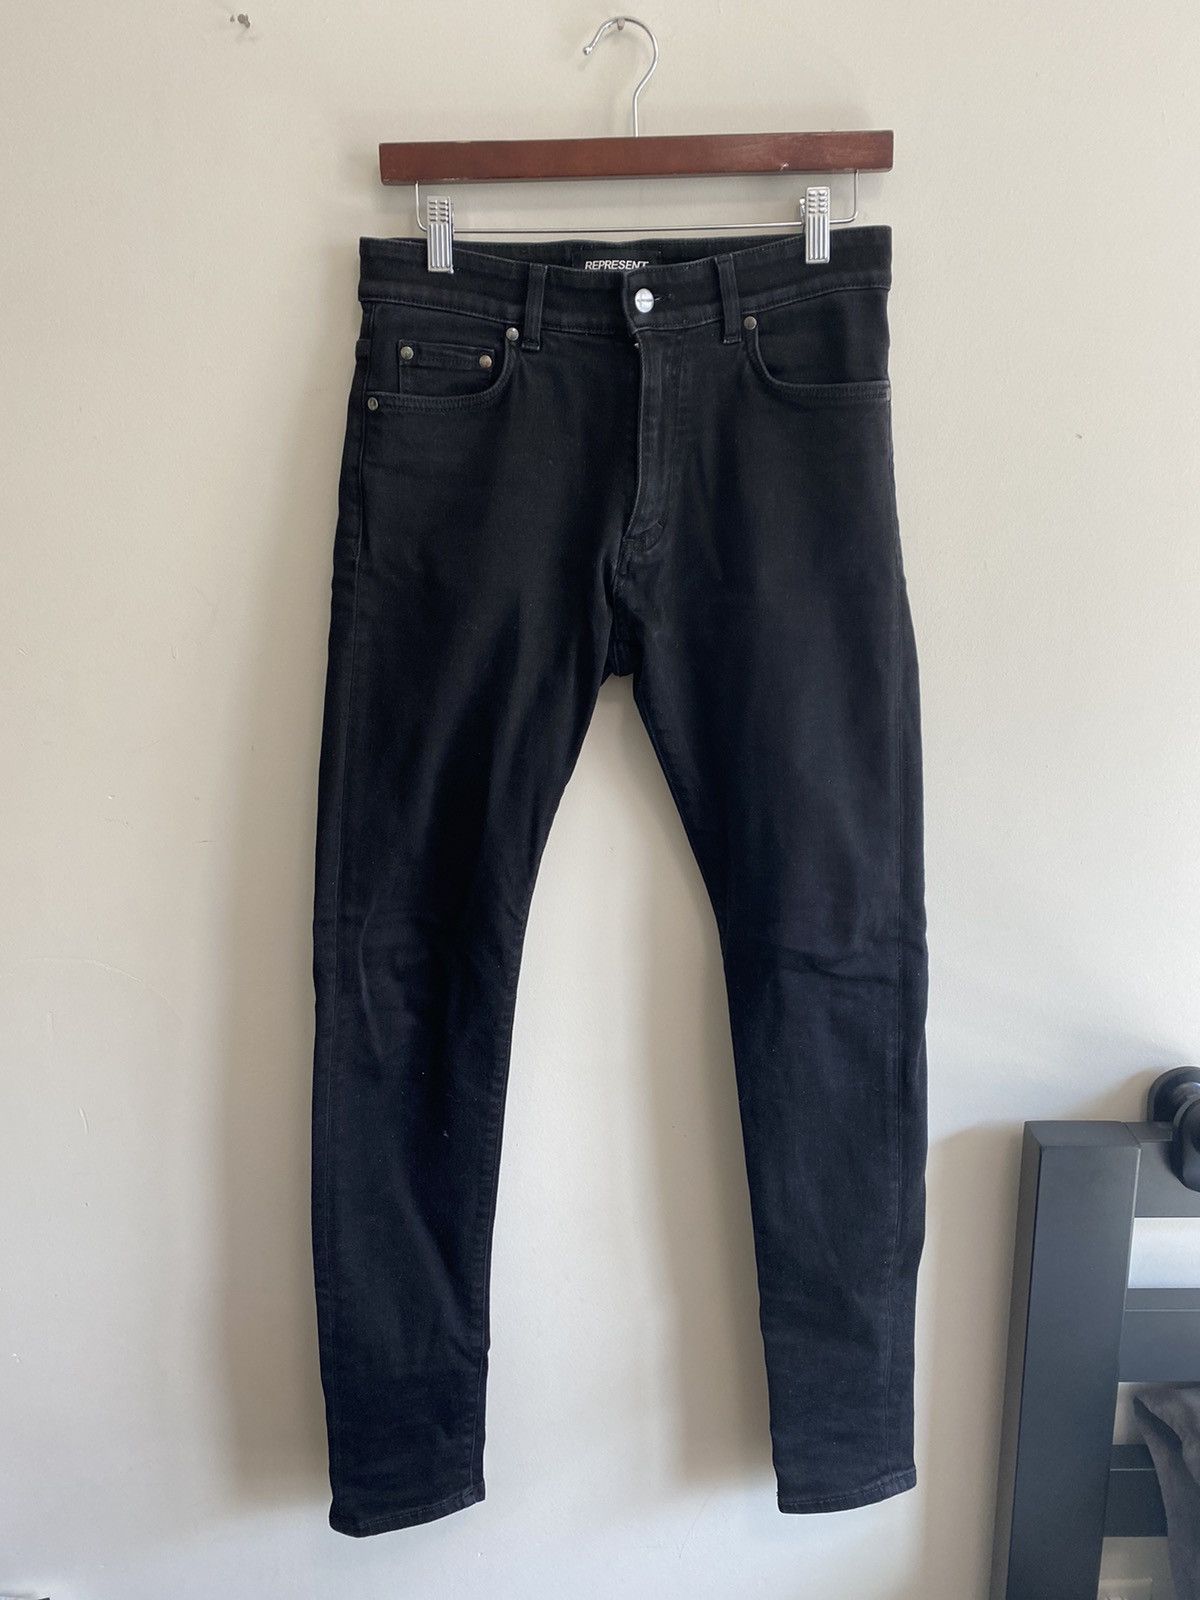 Represent Clo. Represent Black Essential Skinny Denim Jeans | Grailed